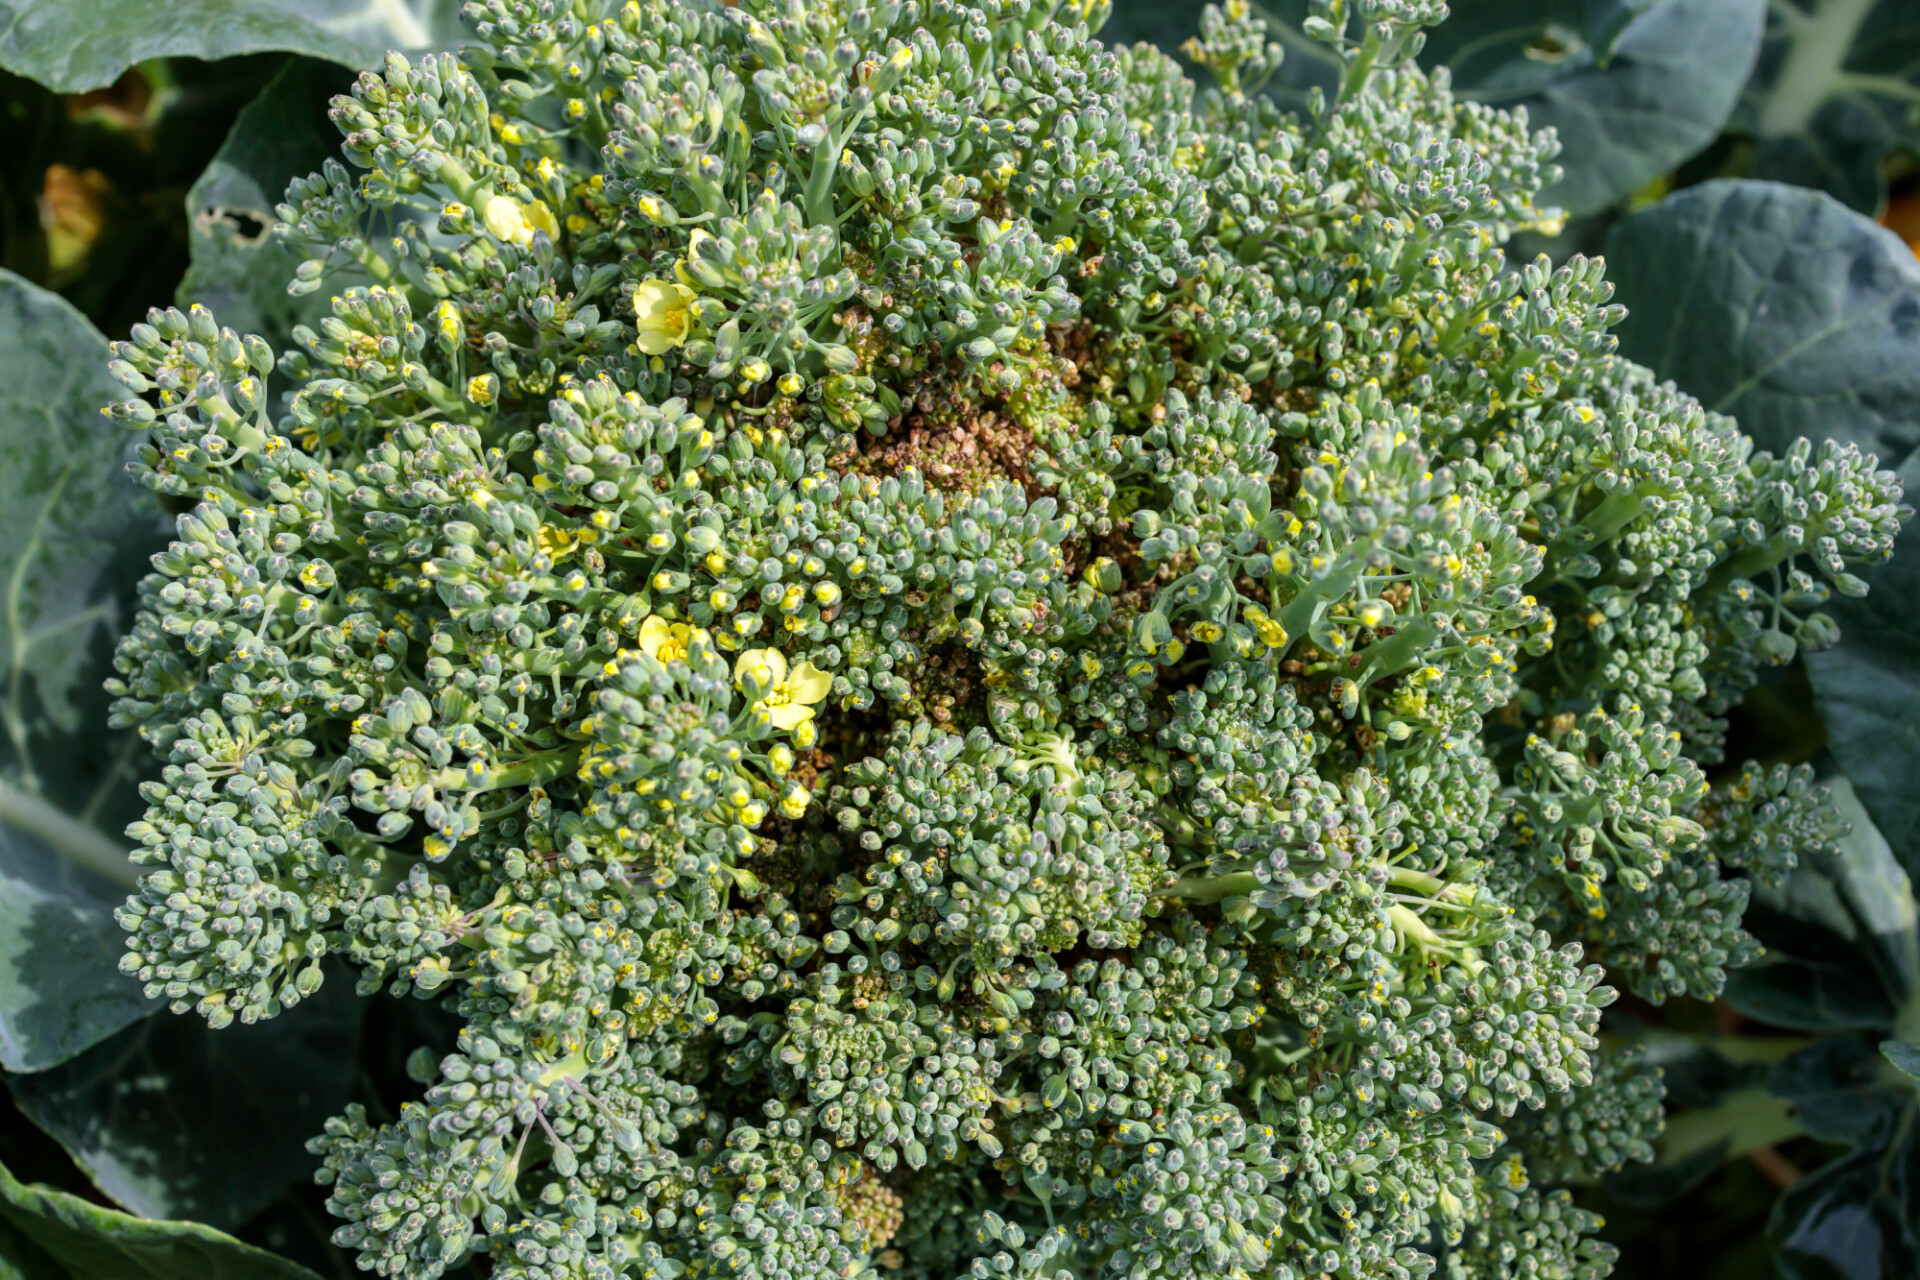 Broccoli just before flowering